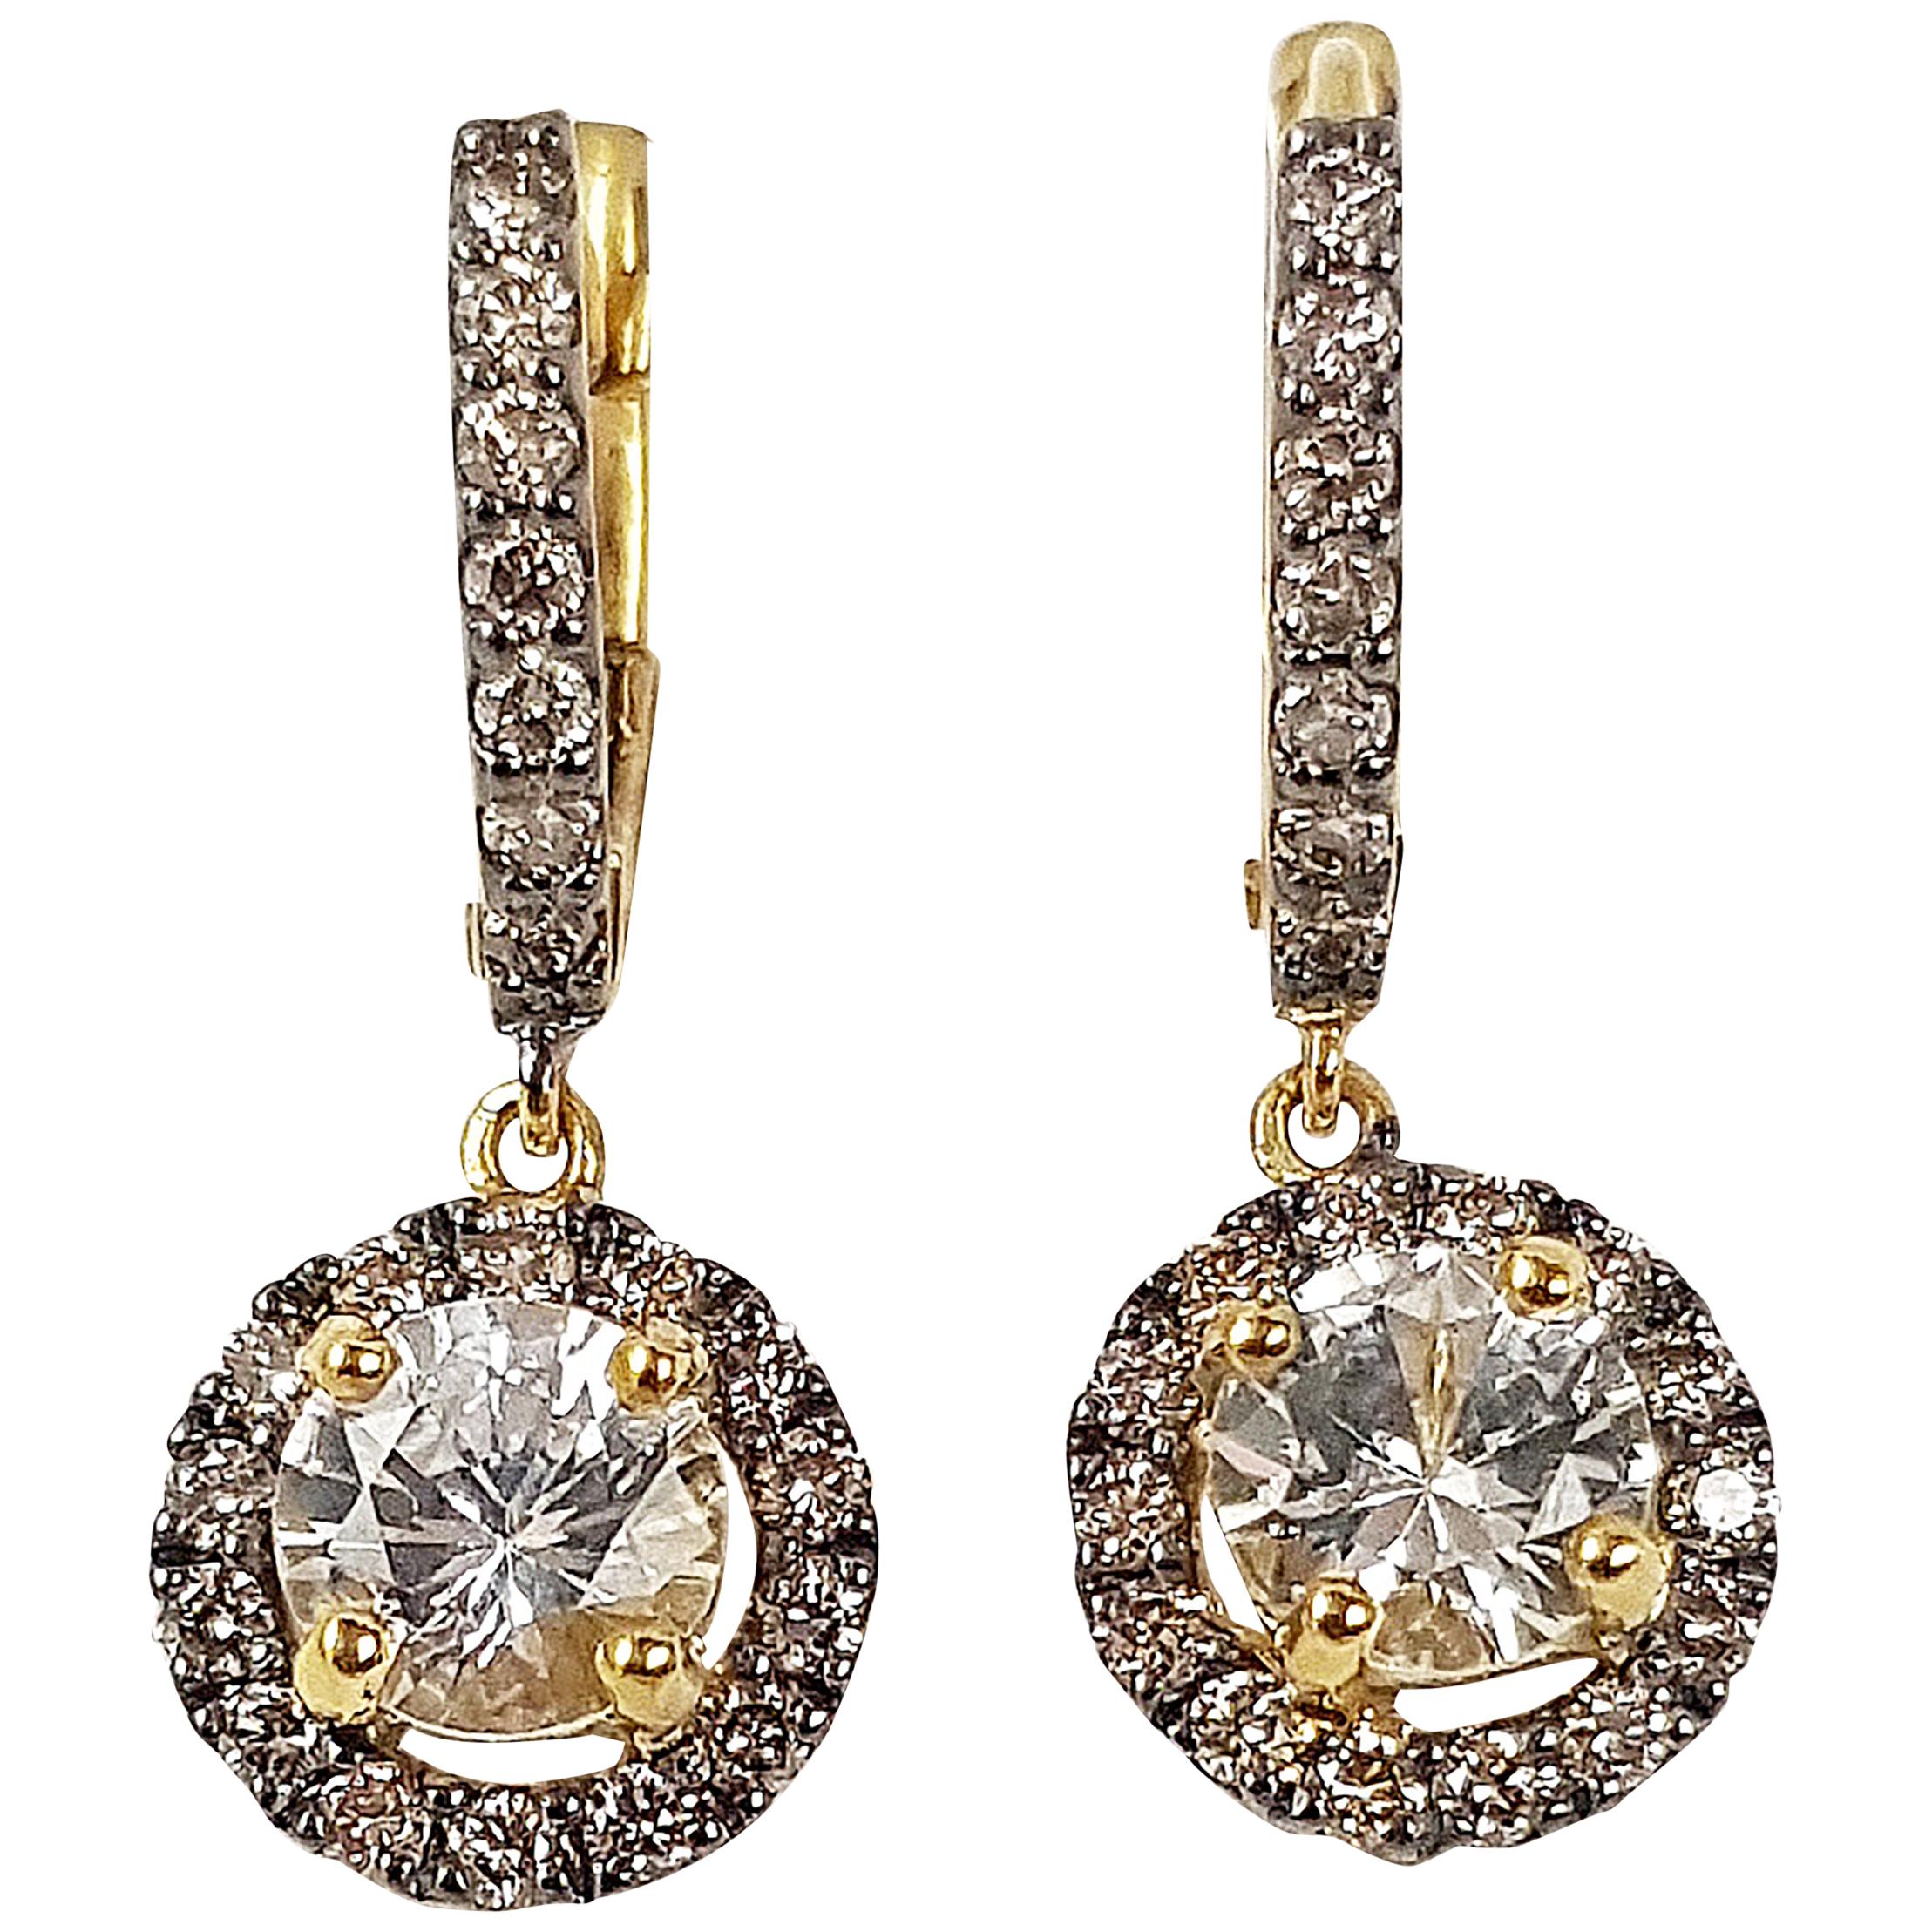 White Sapphire with Brown Diamond Earrings Set in 18 Karat Gold Settings